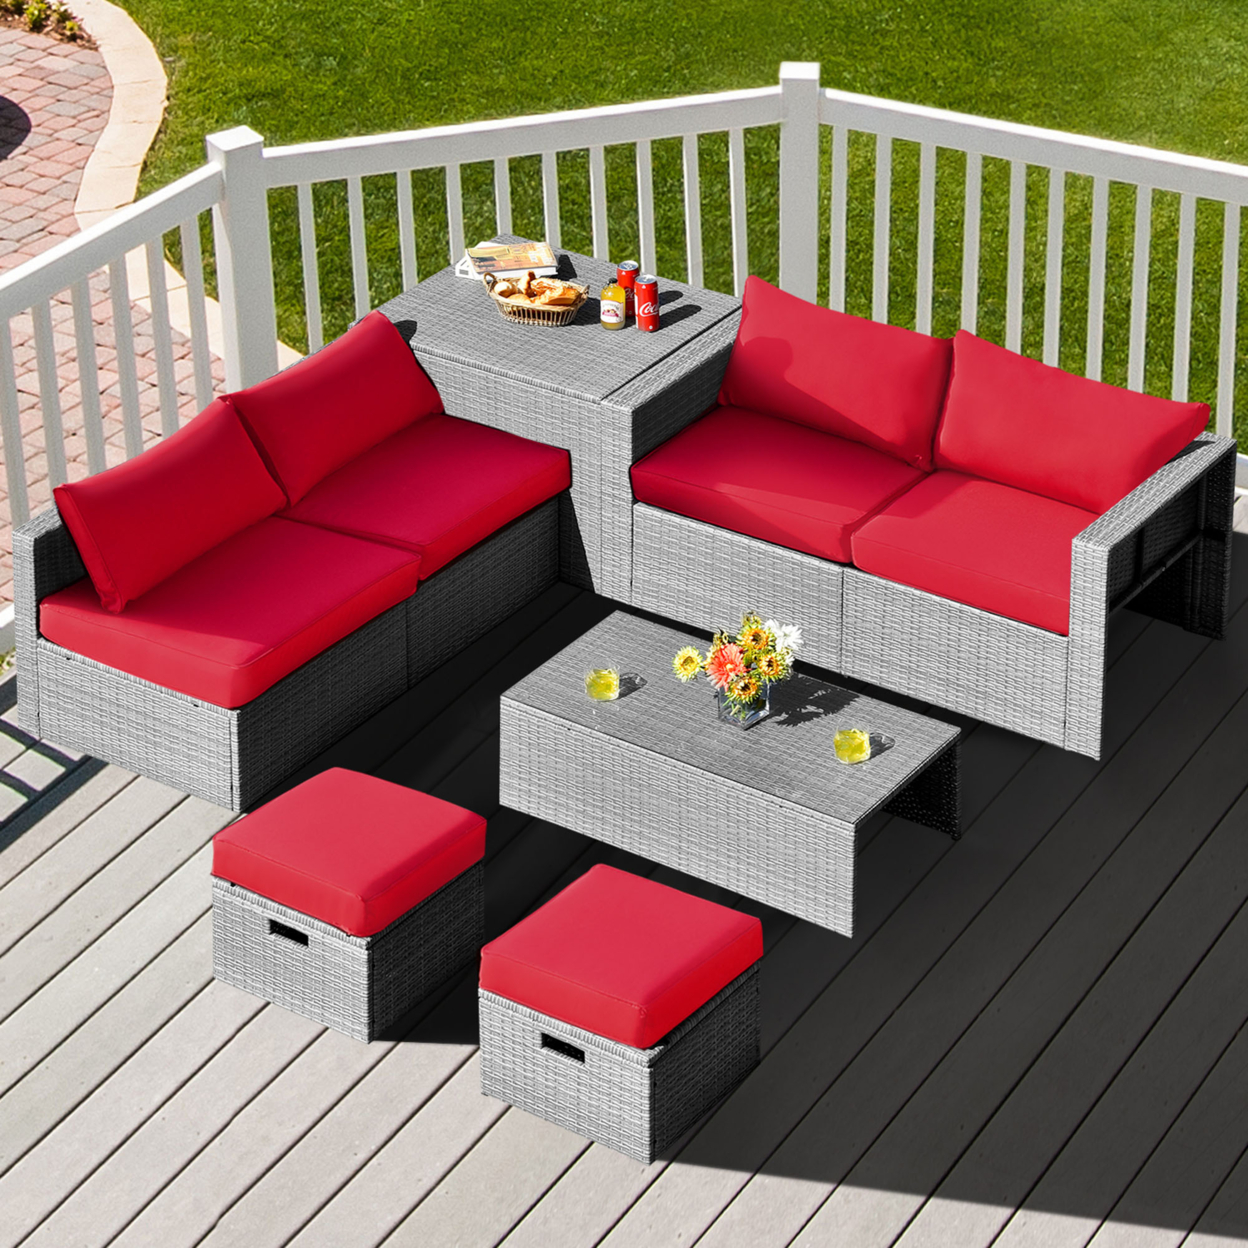 8PCS Rattan Patio Space-Saving Furniture Set W/ Waterproof Cover & Red Cushions